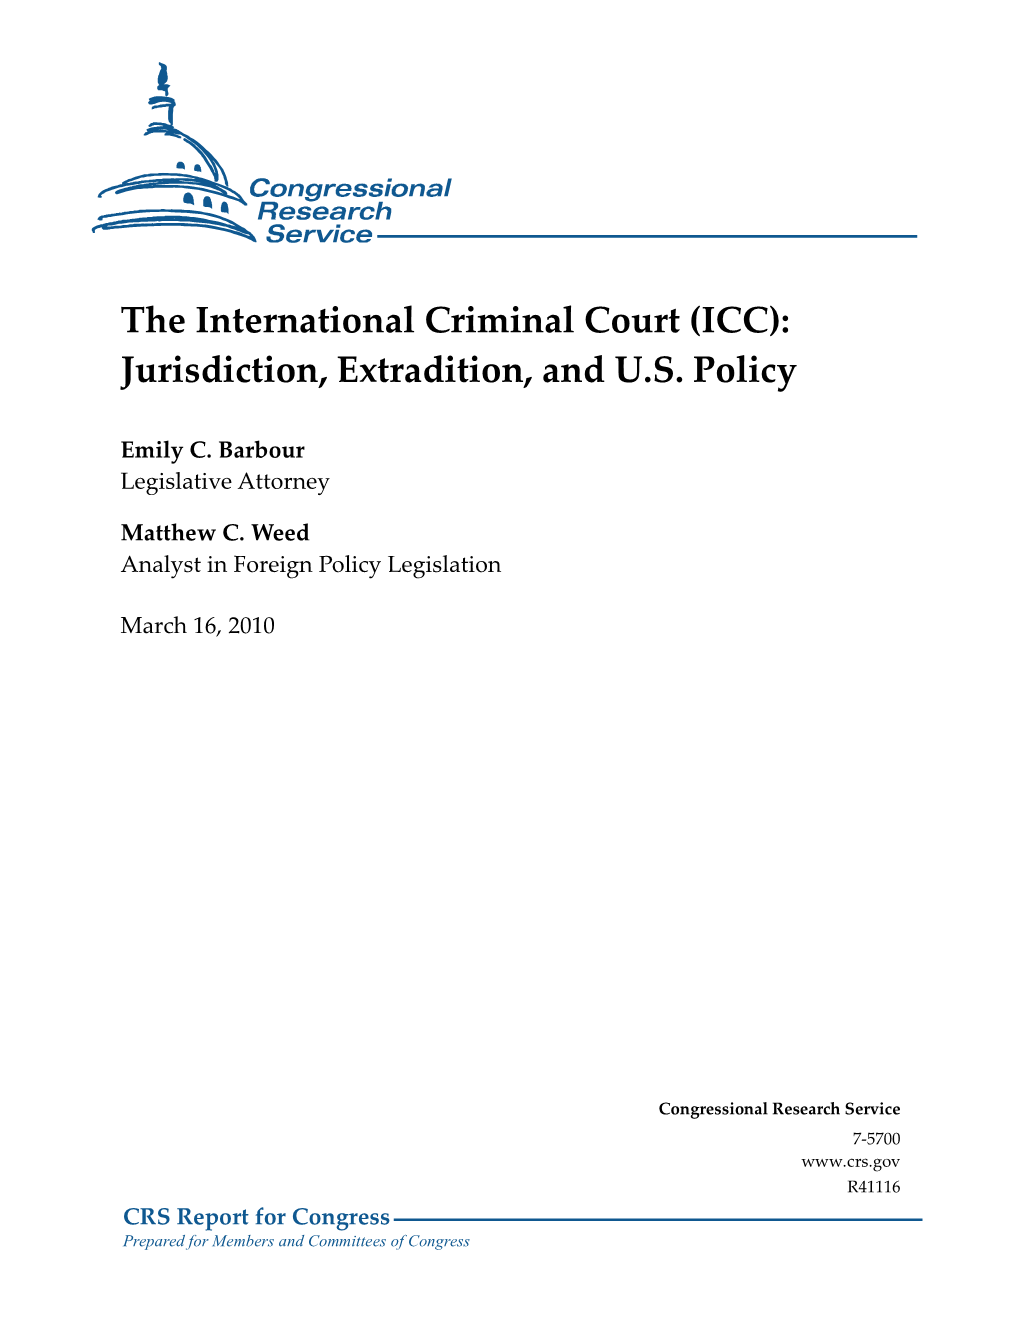 The International Criminal Court (ICC): Jurisdiction, Extradition, and U.S